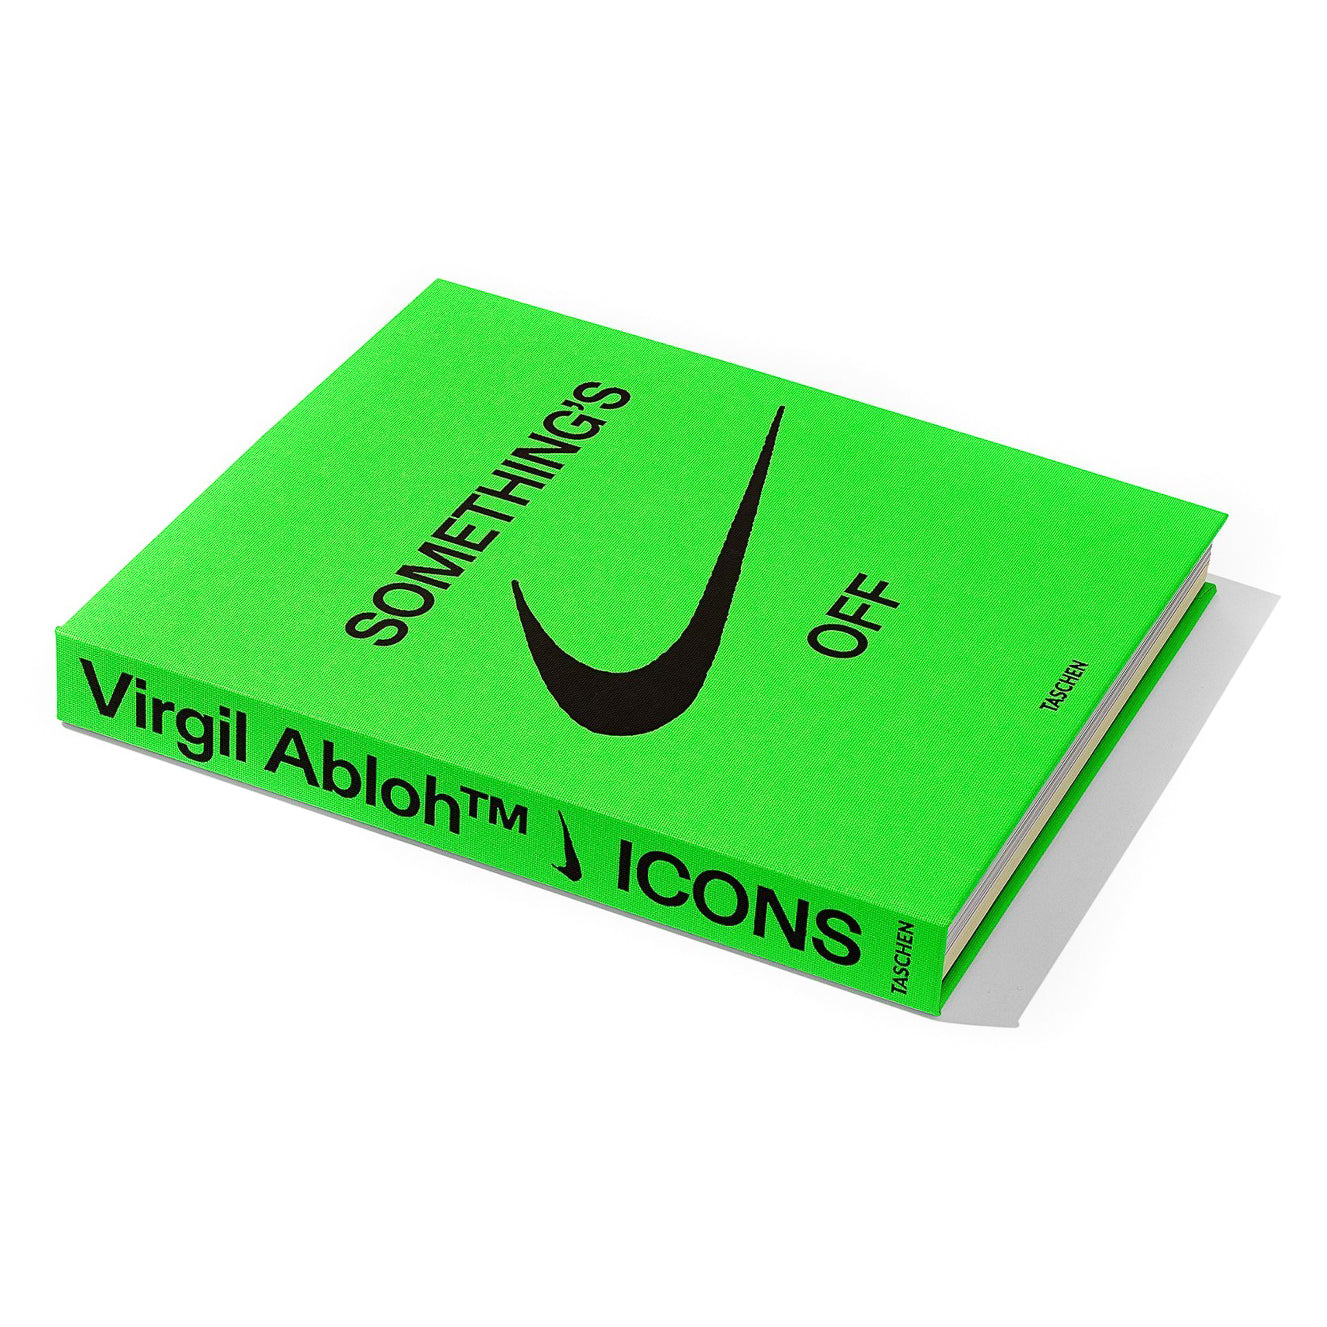 Virgil Abloh ICONS Book